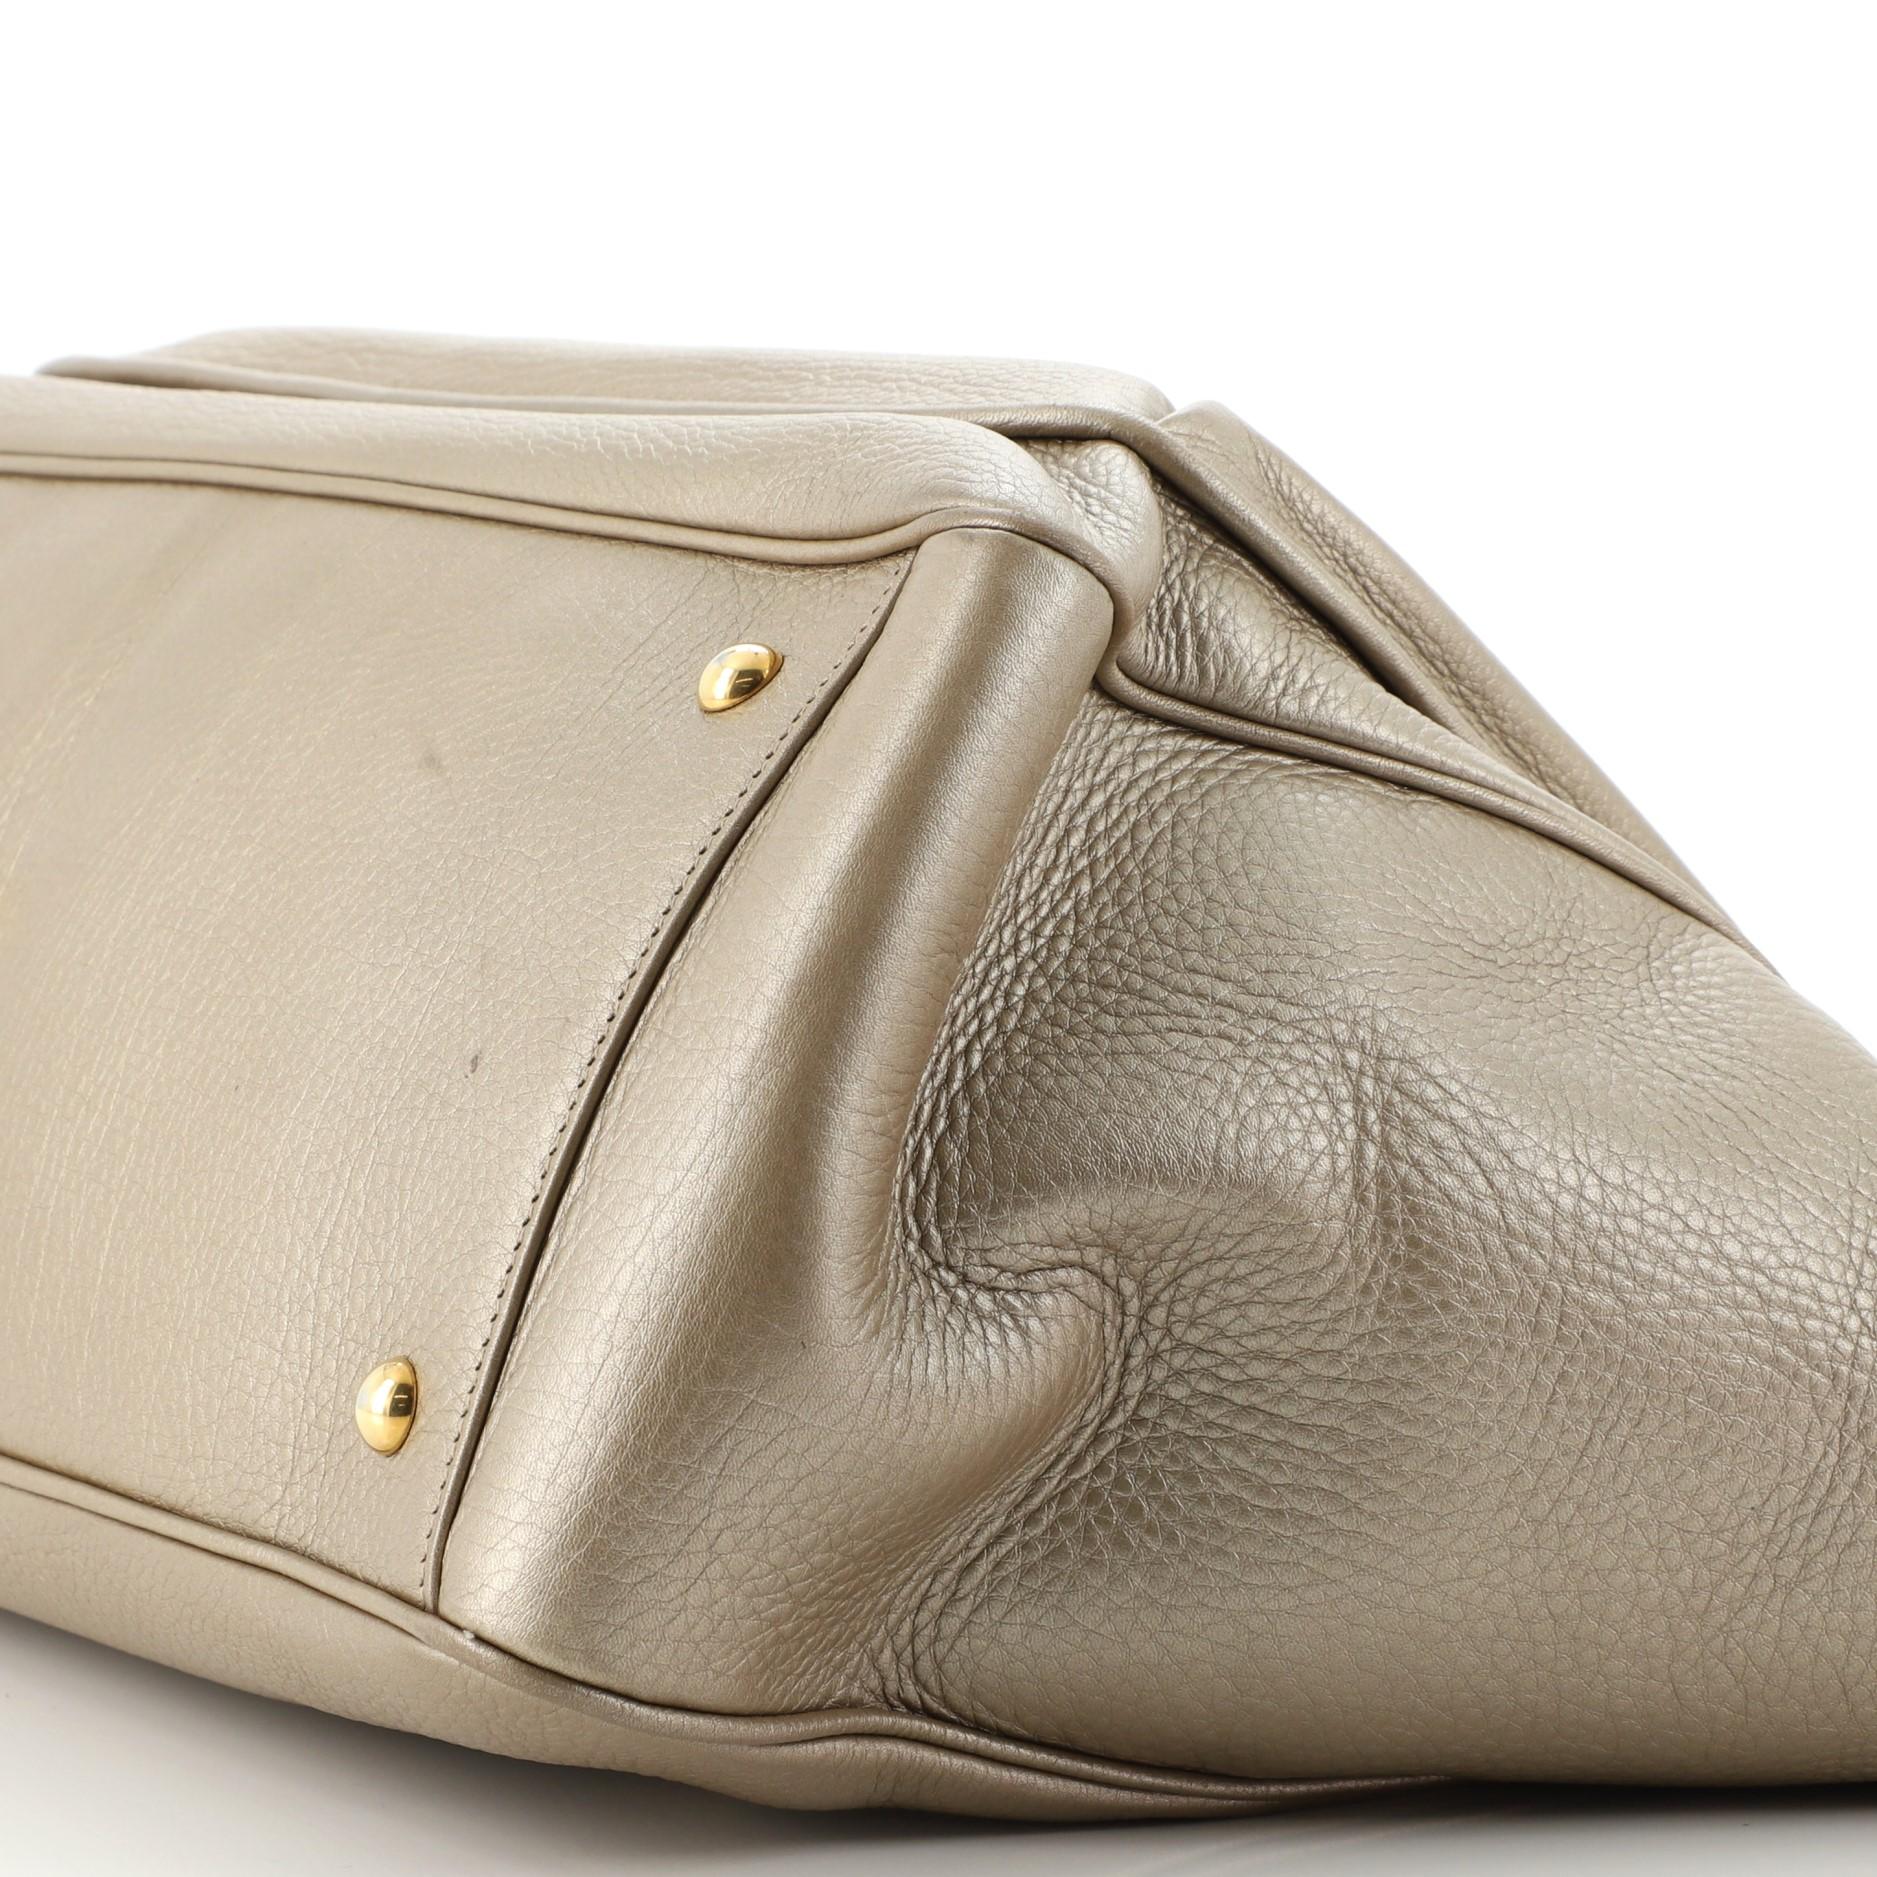 Gucci 1973 Top Handle Bag Leather Medium 2